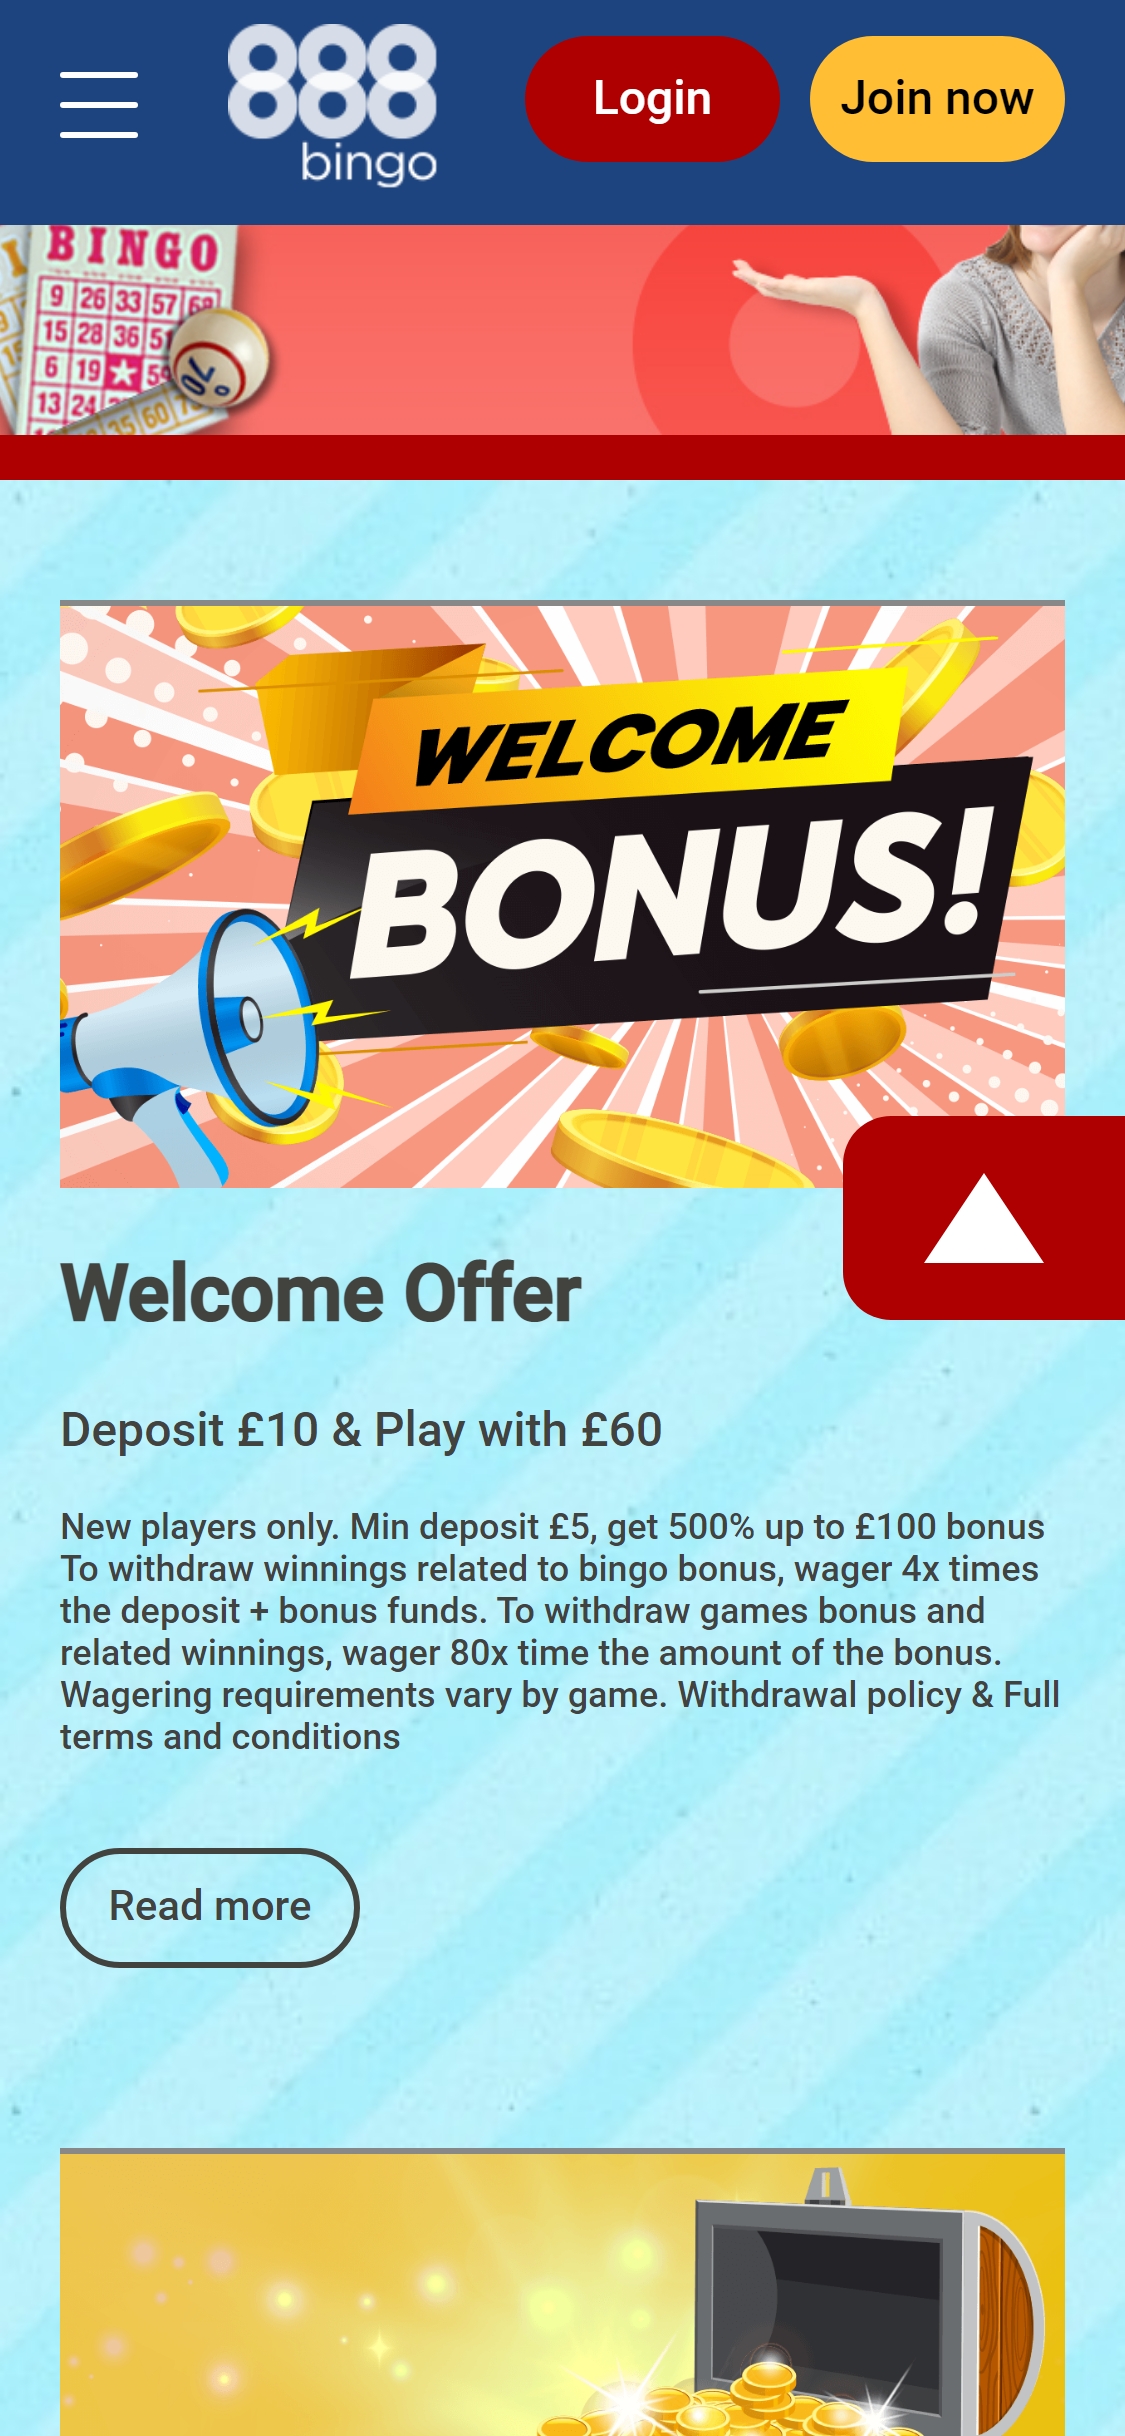 888 Bingo Casino Mobile No Deposit Bonus Review